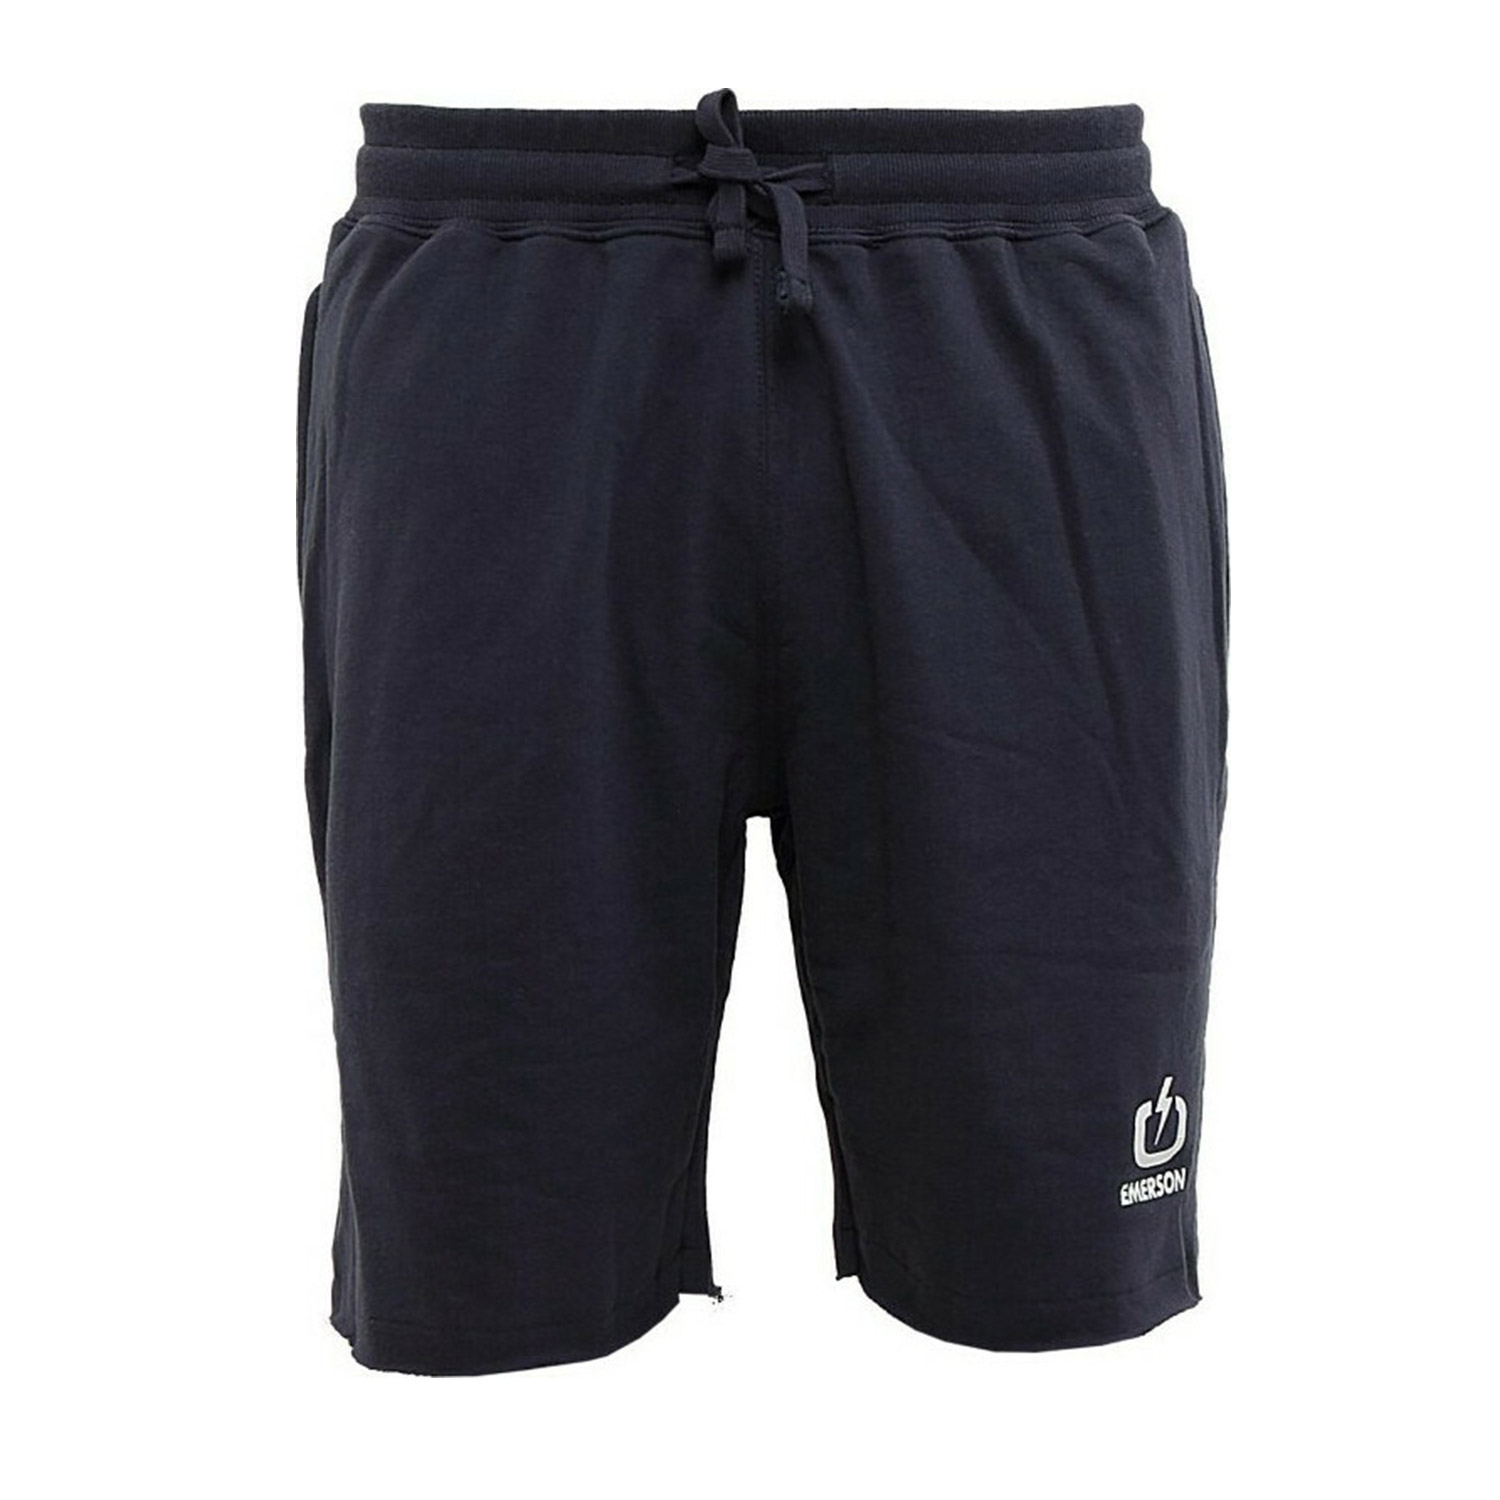 Emerson Men's Sweat Shorts (211.EM26.37-NAVY BLUE)